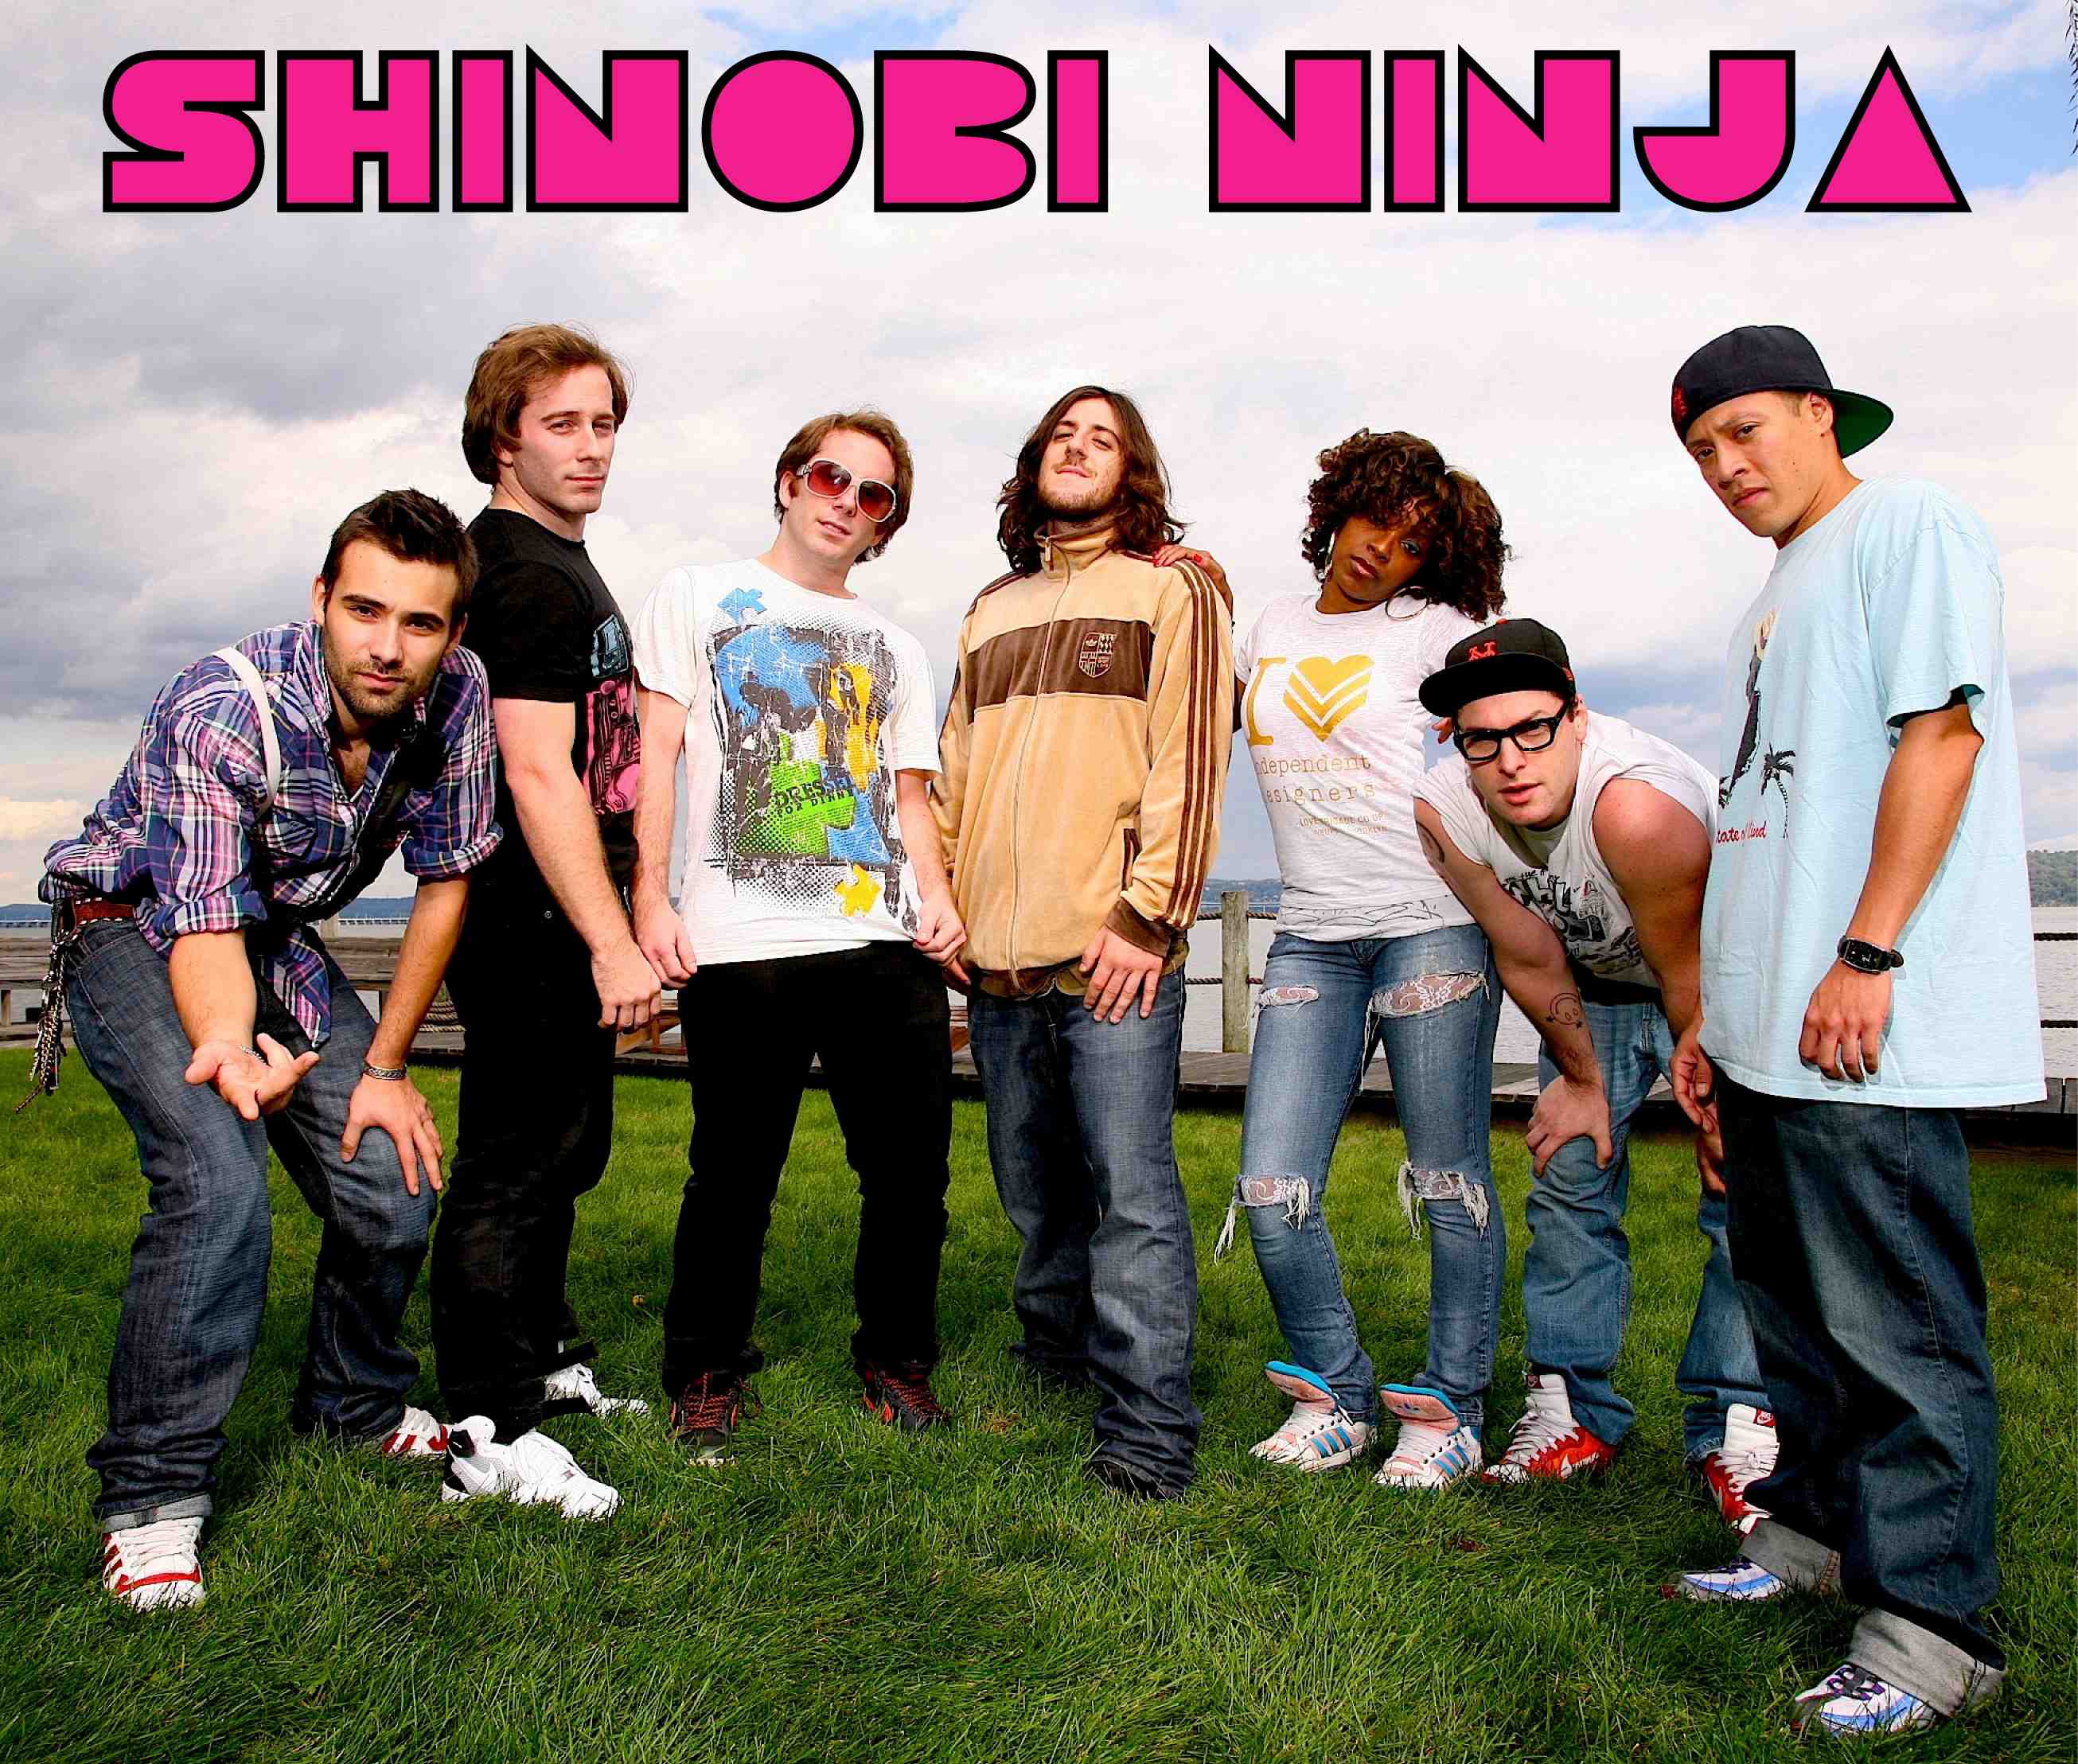 http://indiemusicpeople.com/uploads2/122999_10_9_2008_11_50_52_AM_-_ninja_top_banner_small.jpg